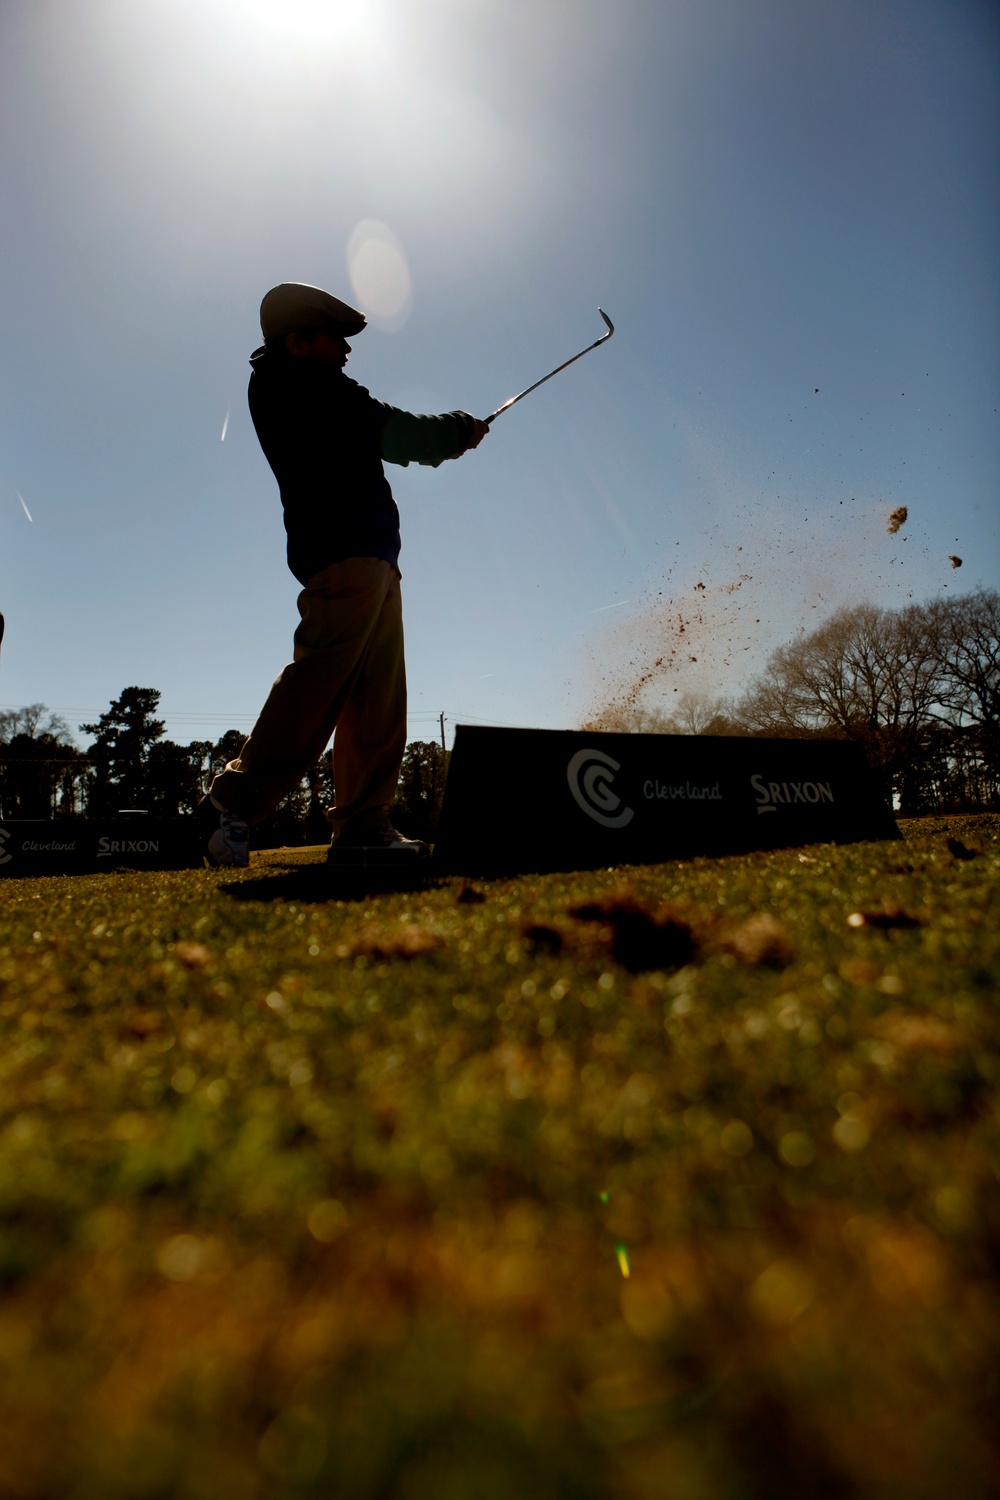 Demo Day makes golfers drive longer, swing better